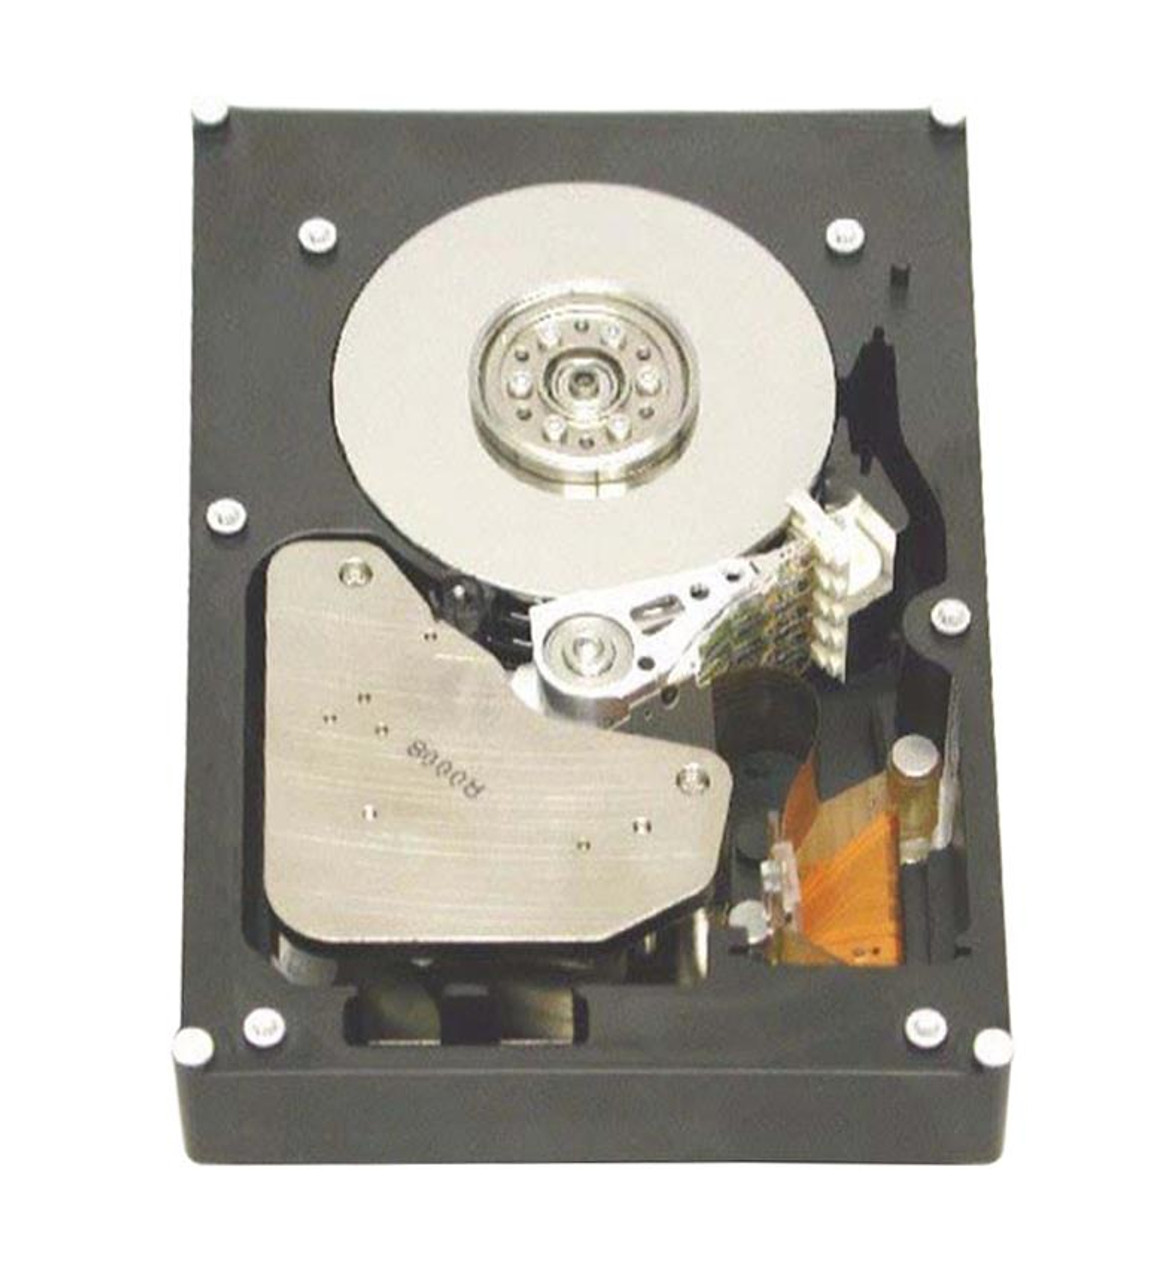 HUS151436VL3800-DELL Hitachi Ultrastar 15K147 36.7GB 15000RPM Ultra-320 SCSI 80-Pin 16MB Cache 3.5-inch Internal Hard Drive